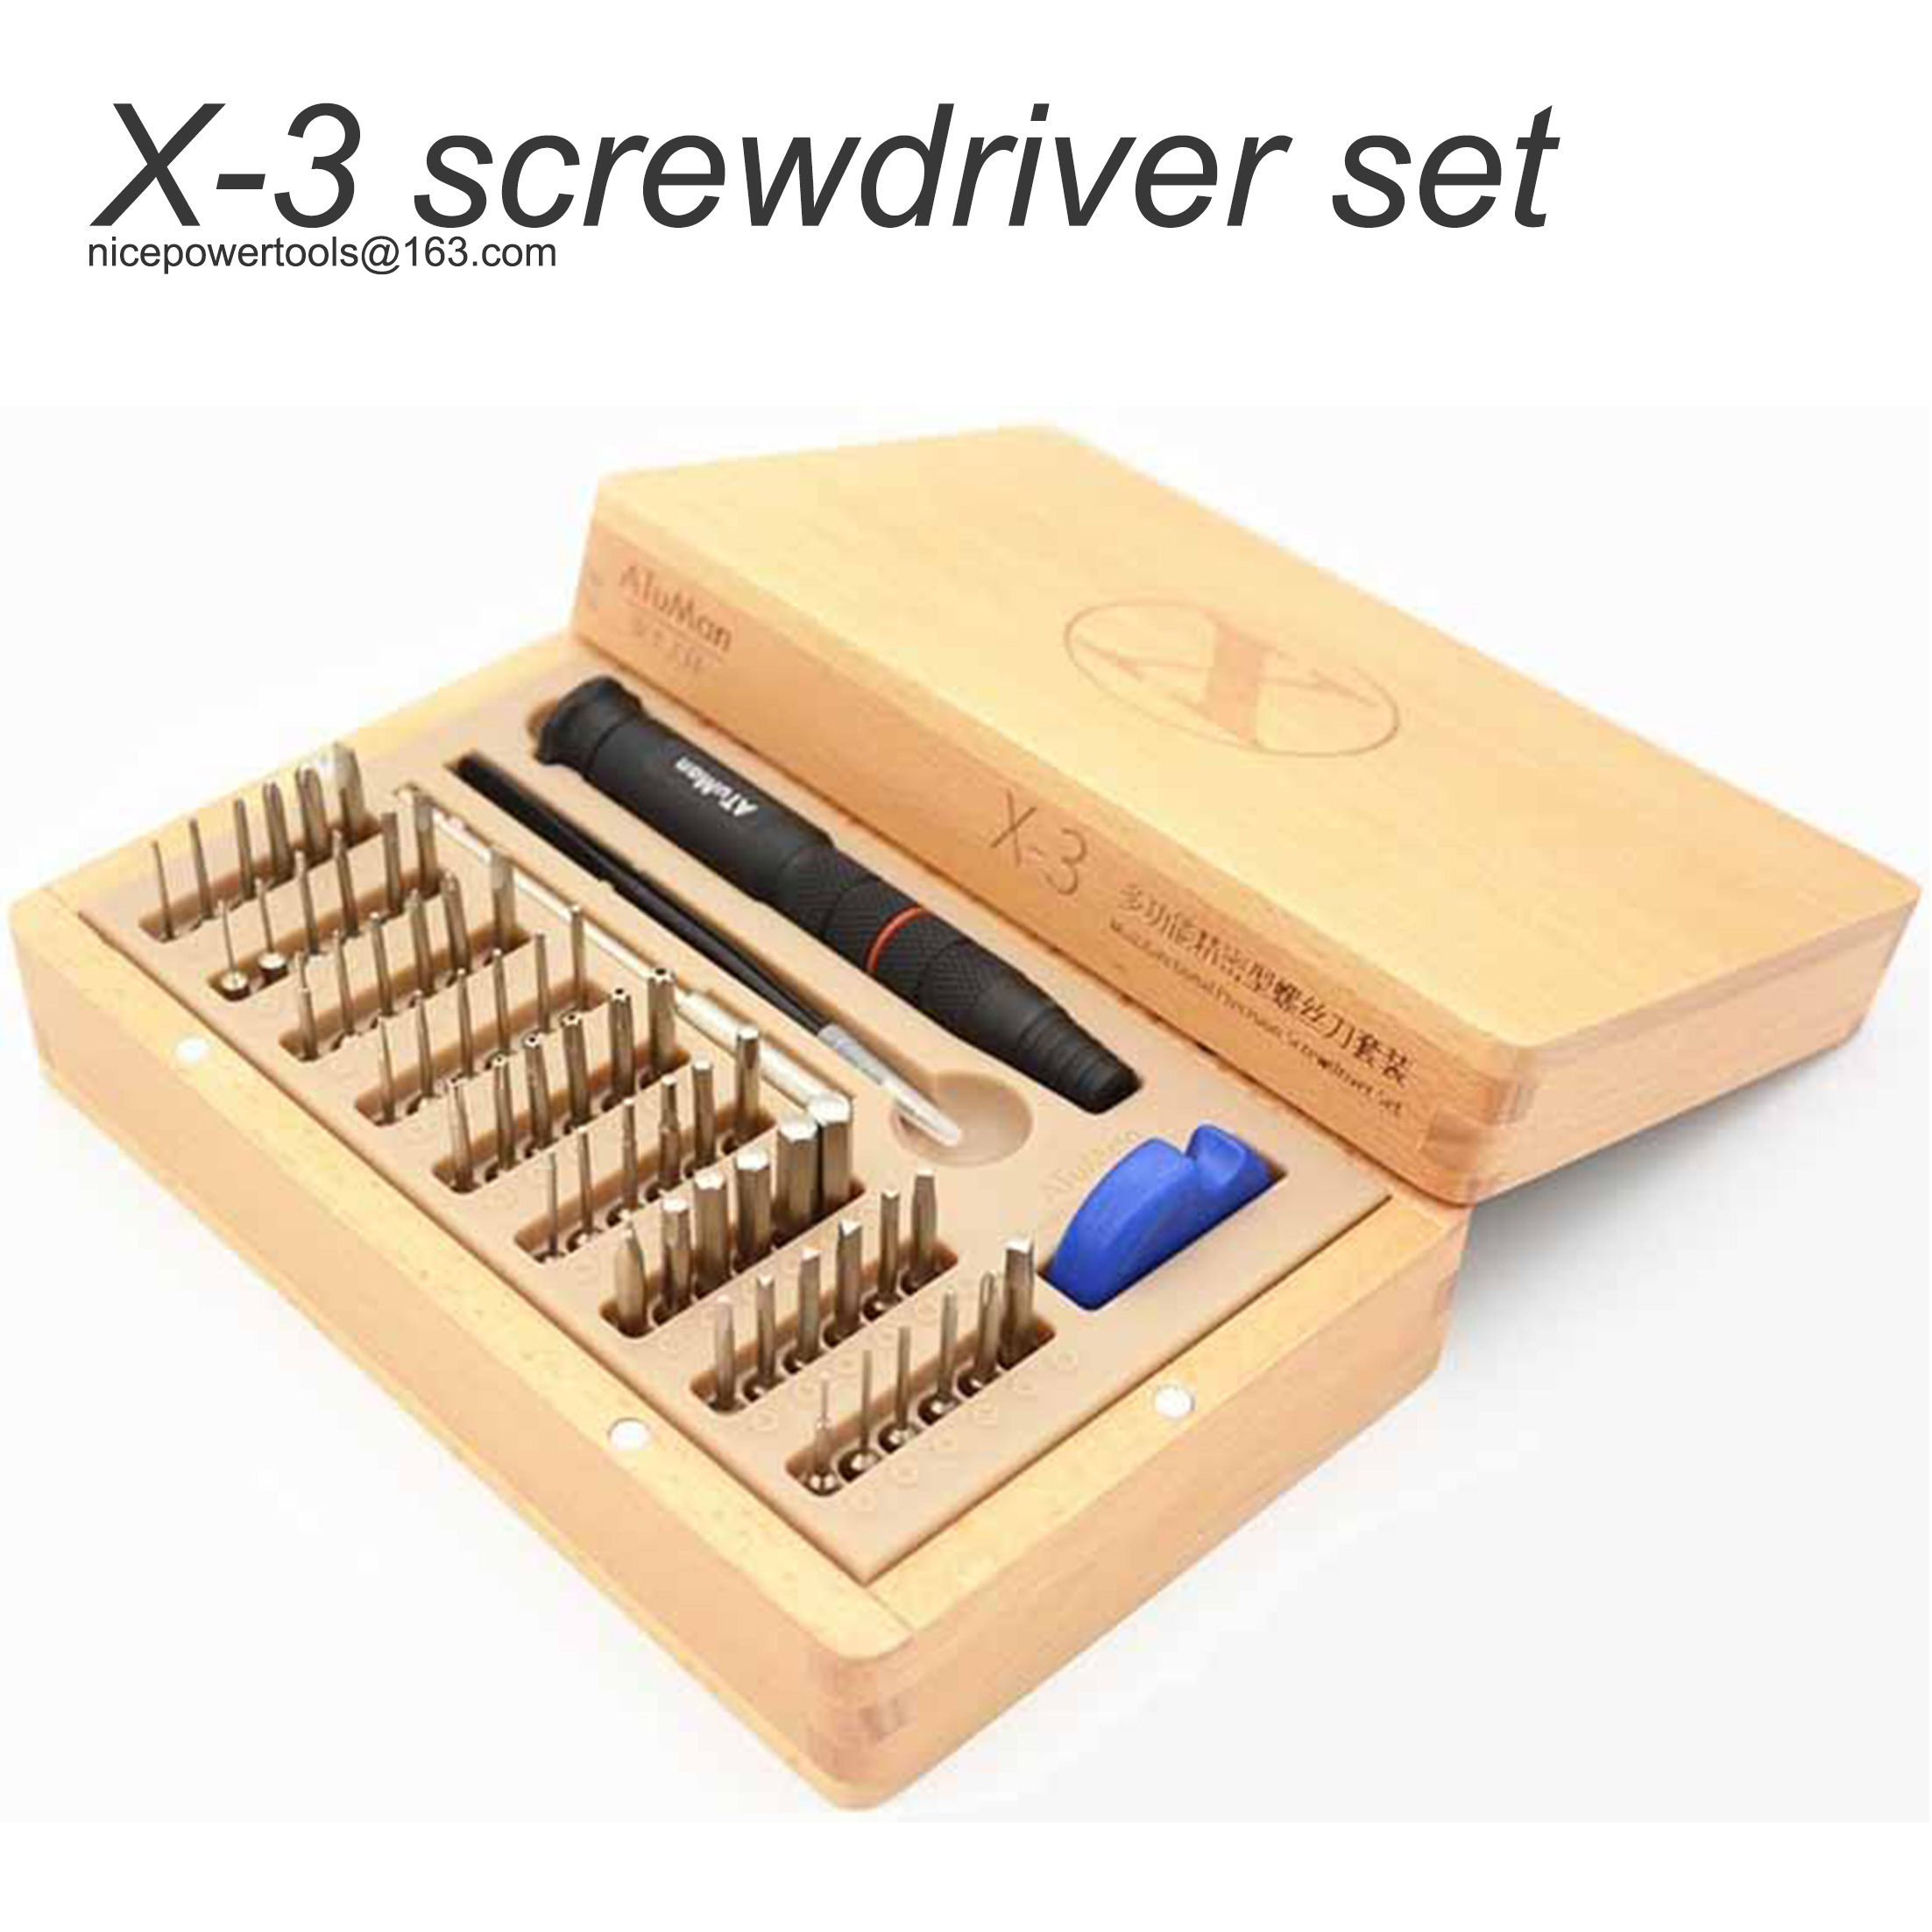 X-3 professional screwdriver set